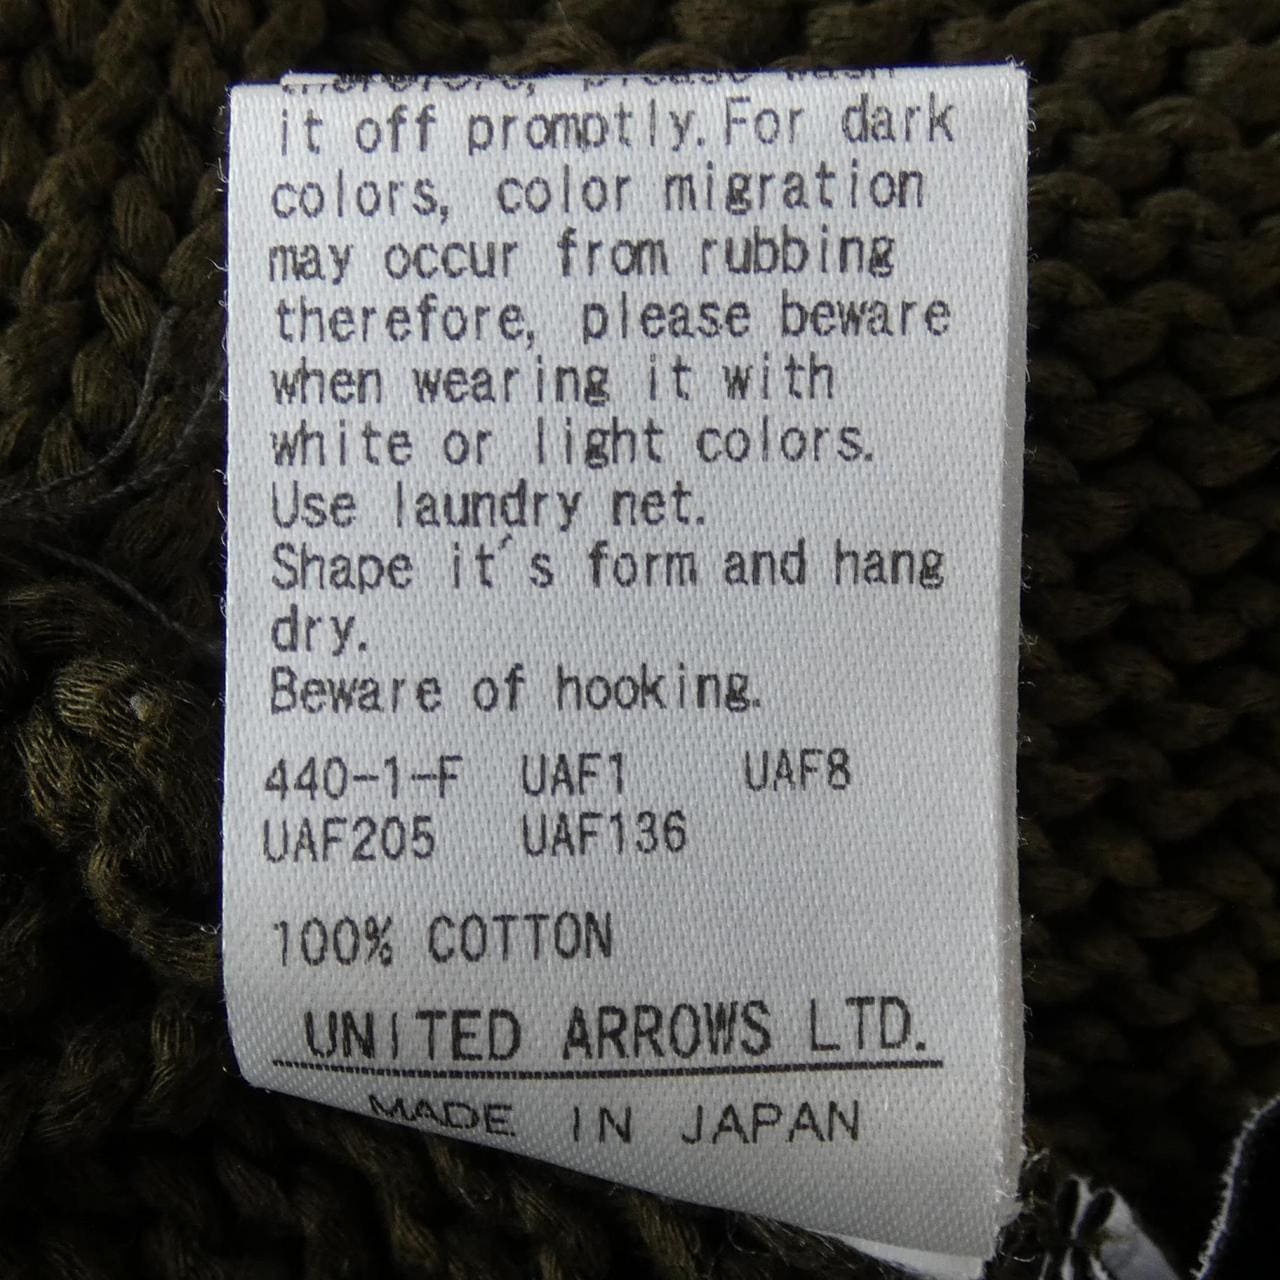 UNITED ARROWS针织衫